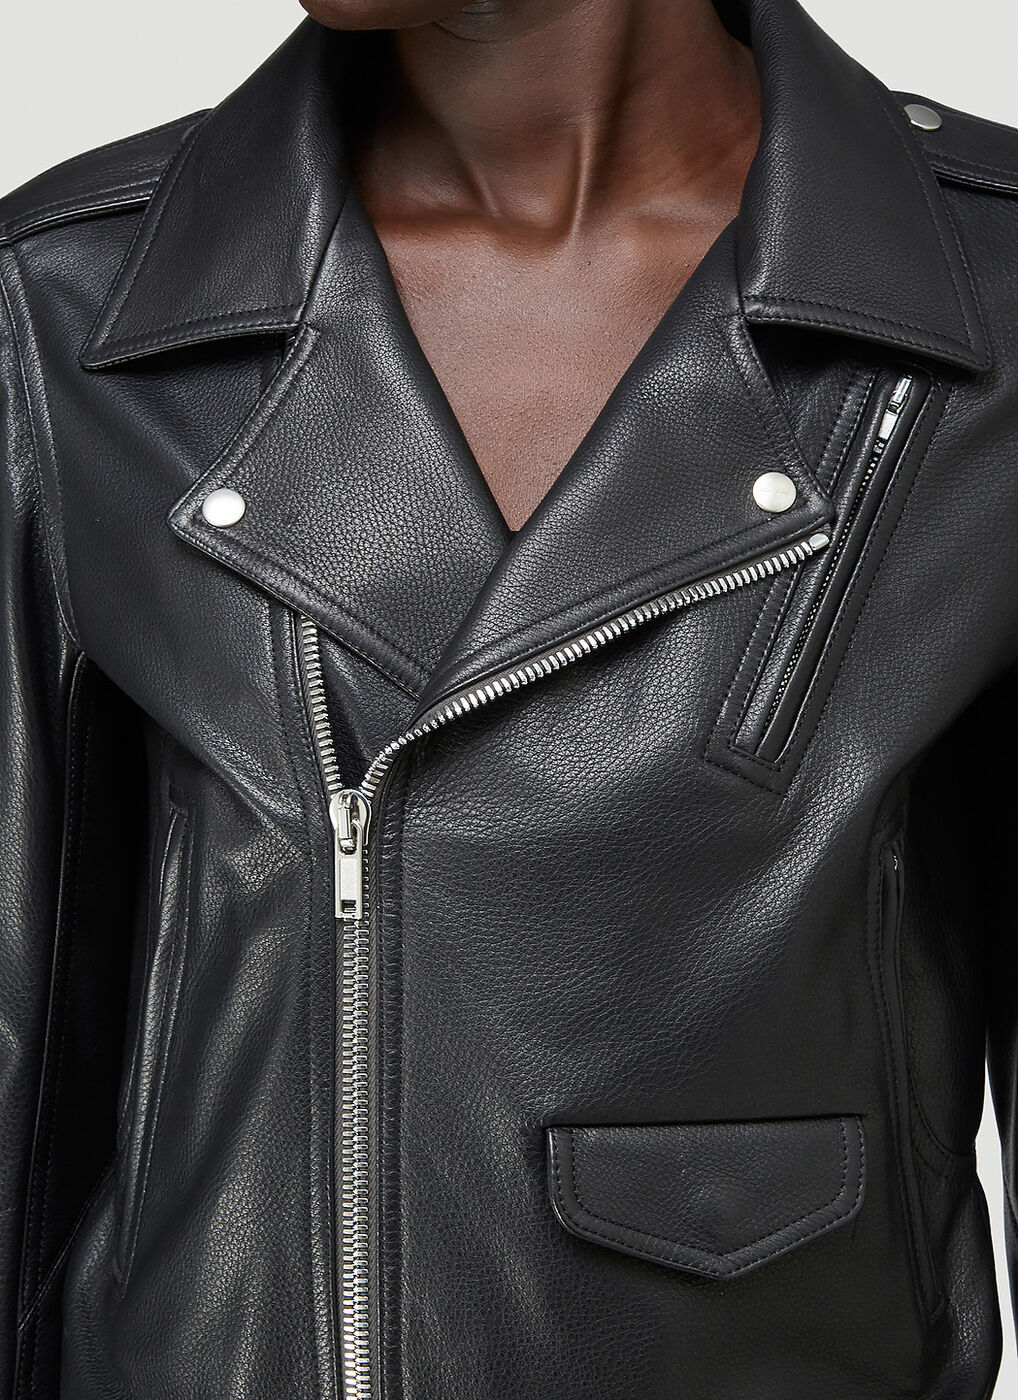 Lukes Stooges Leather Jacket in Black